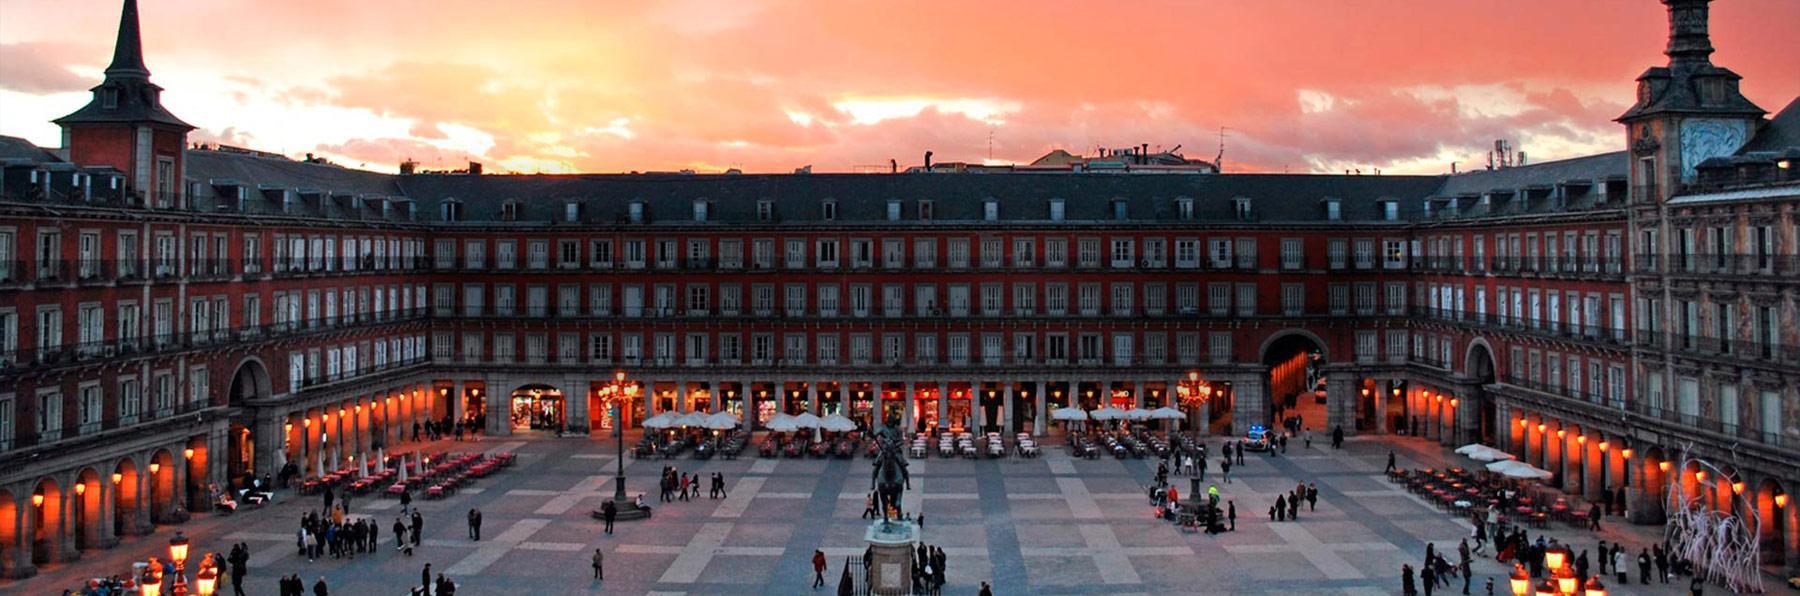 Actividades Culturales en Madrid